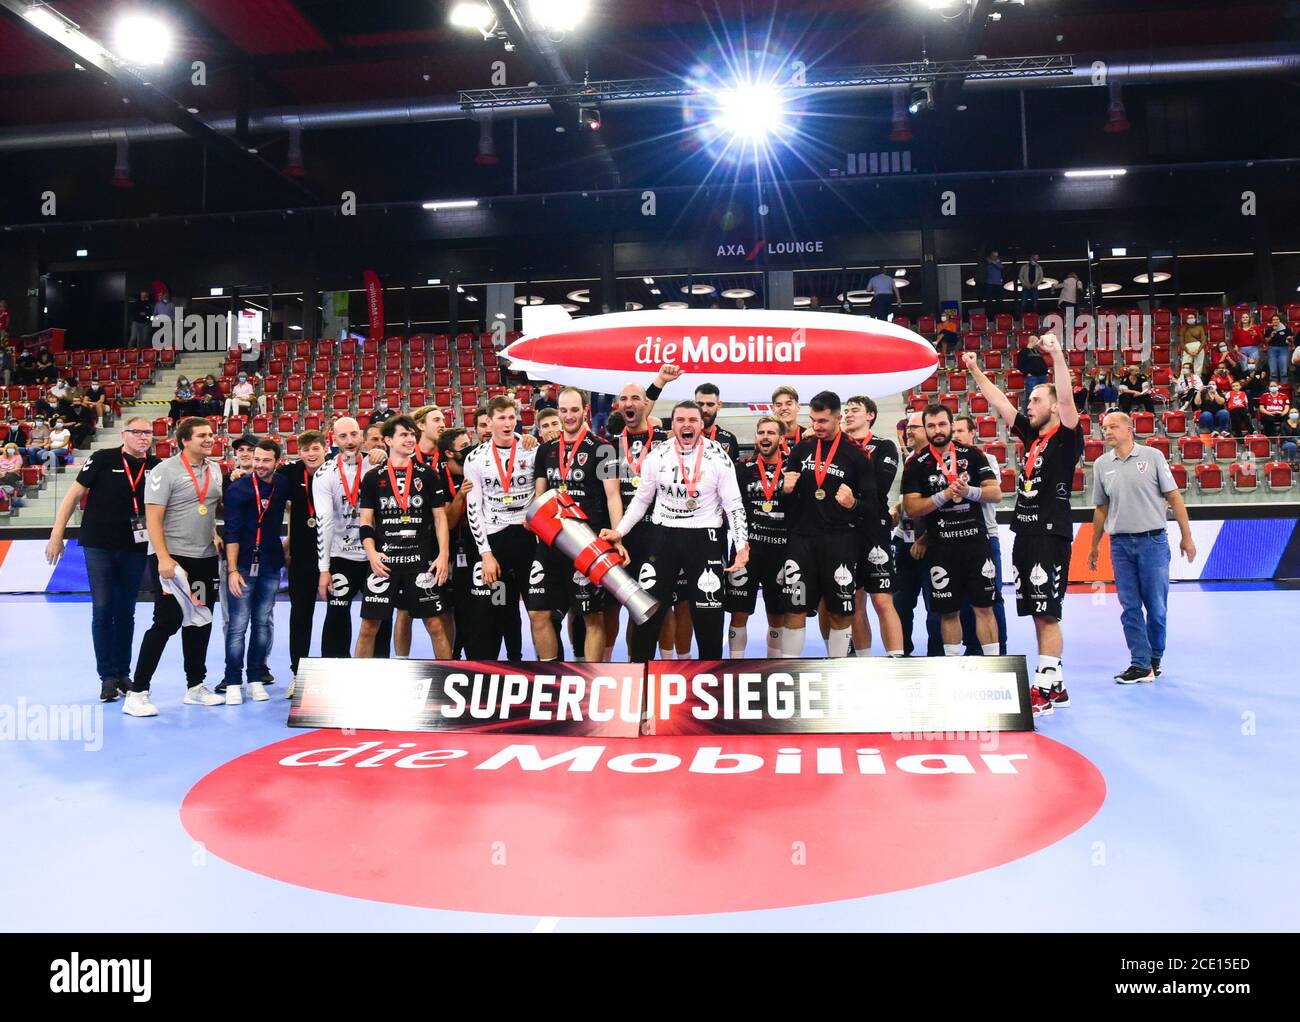 08/30/2020, Winterthur, Axa Arena, Handball Supercup men Cadets Schaffhausen - HSC Suhr Aarau, Supercup winner HSC Suhr Aarau Stock Photo